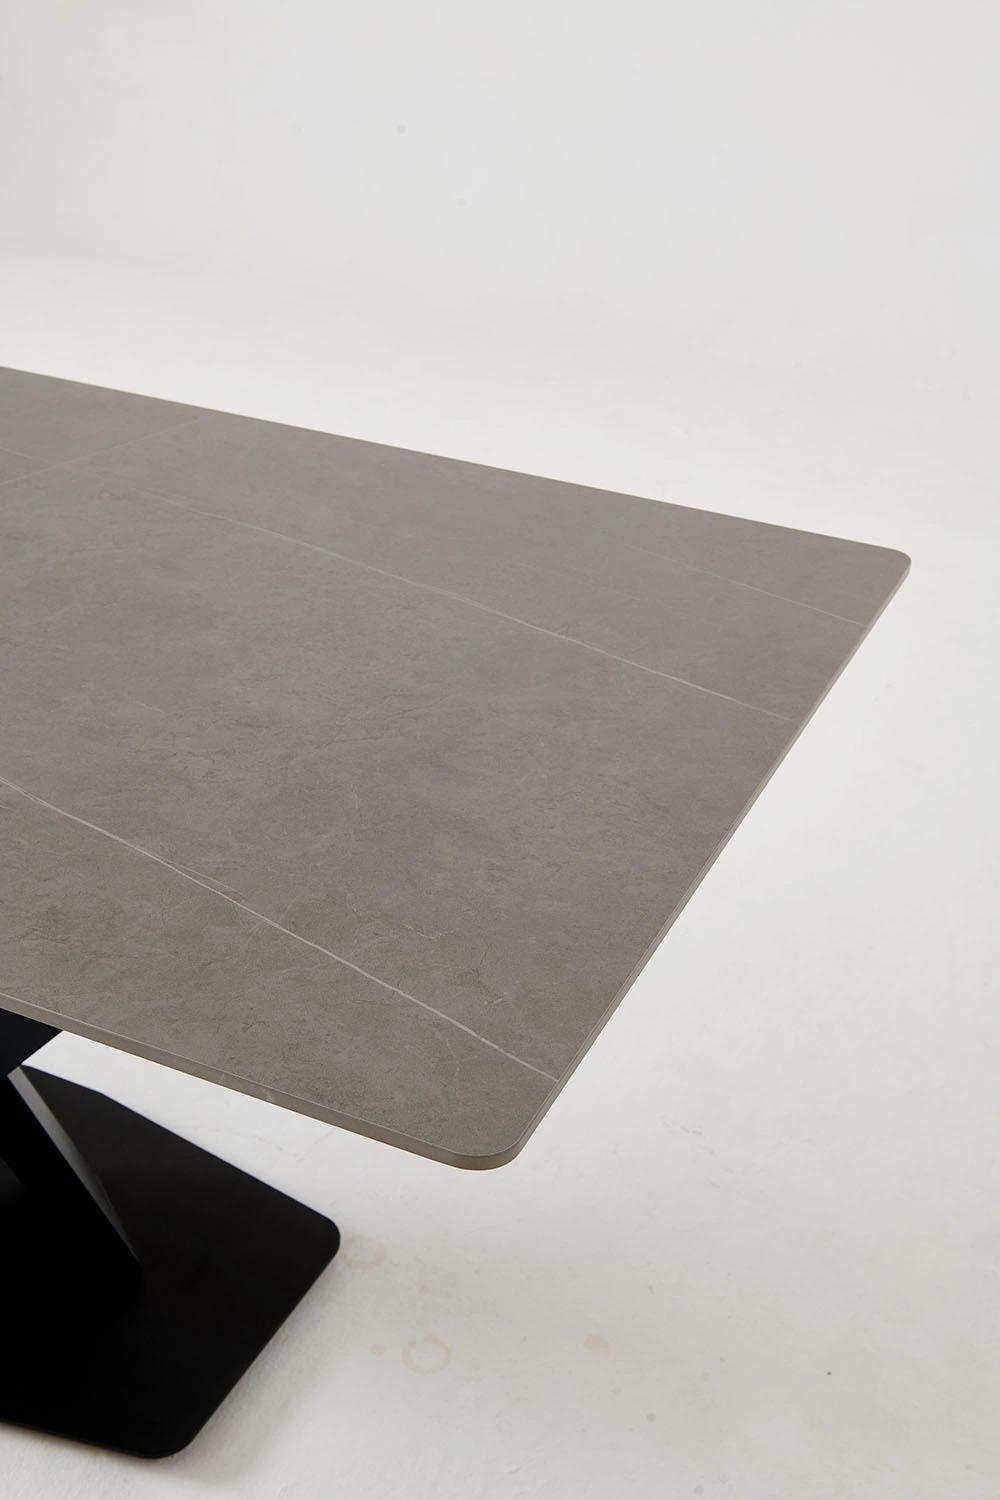 Titanium Legs White Home Restaurant Furniture Marble Dining Table